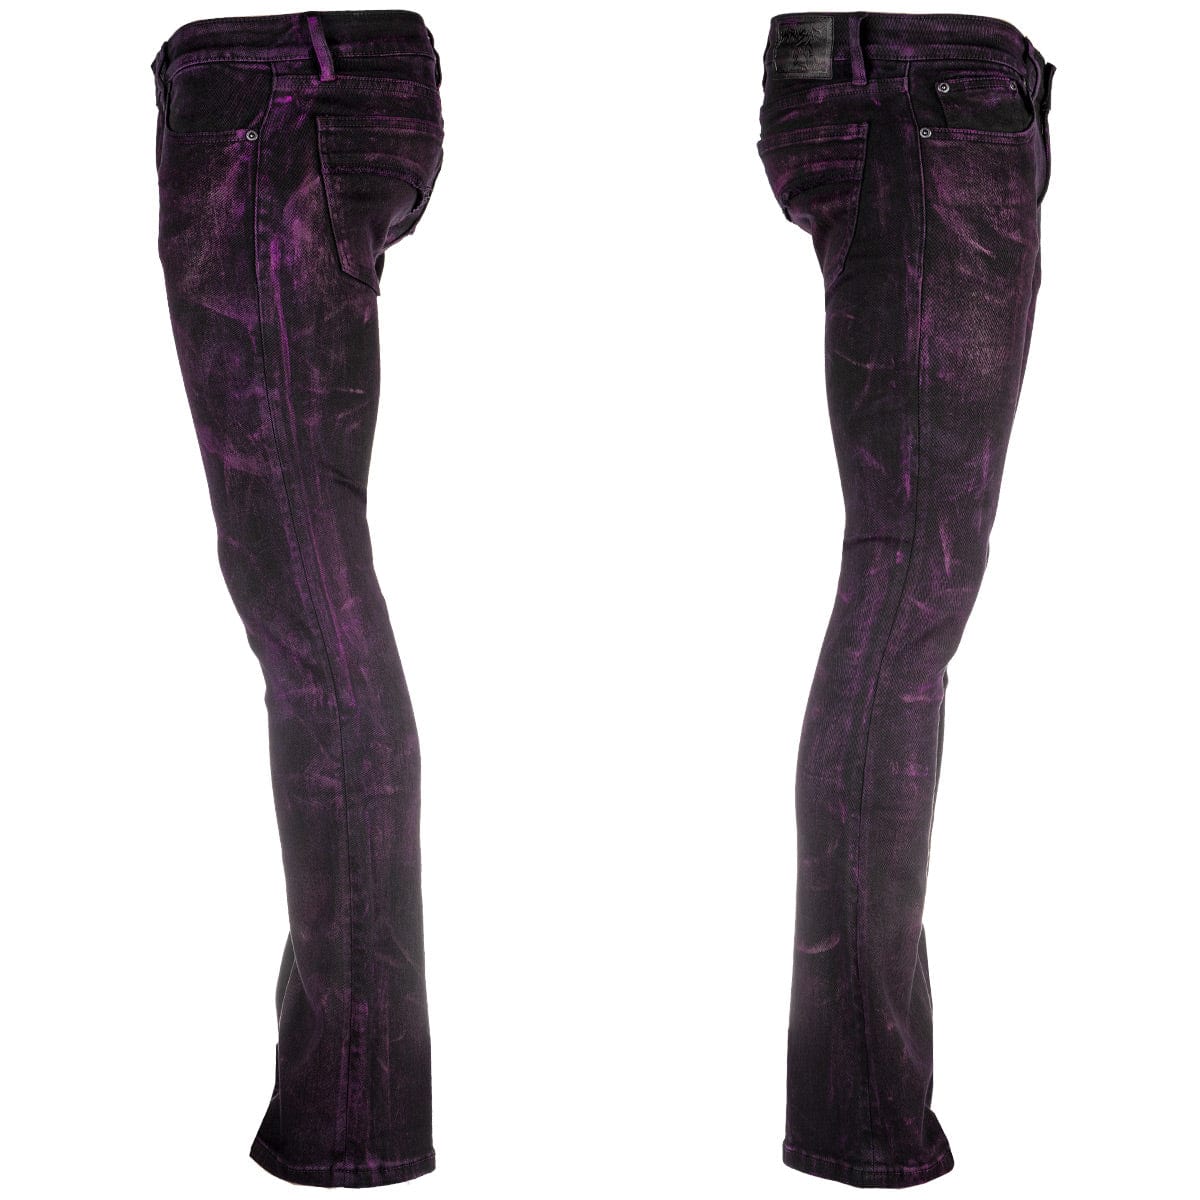 Custom Chop Shop Pants Copy of Wornstar Custom Jeans - Purple Haze Alloy Washed